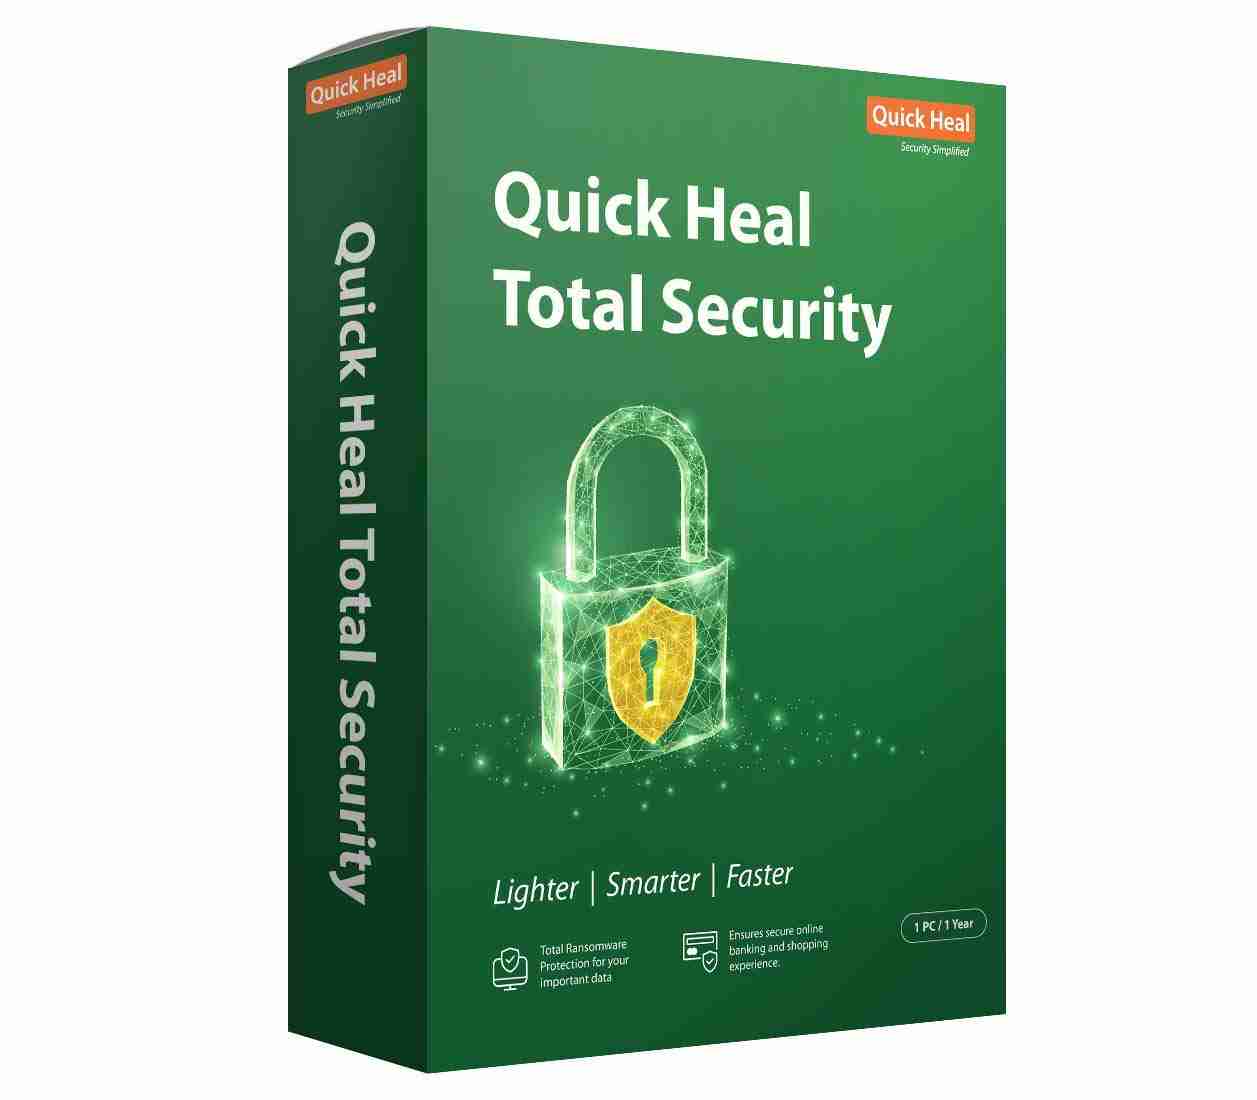 Quickheal total security